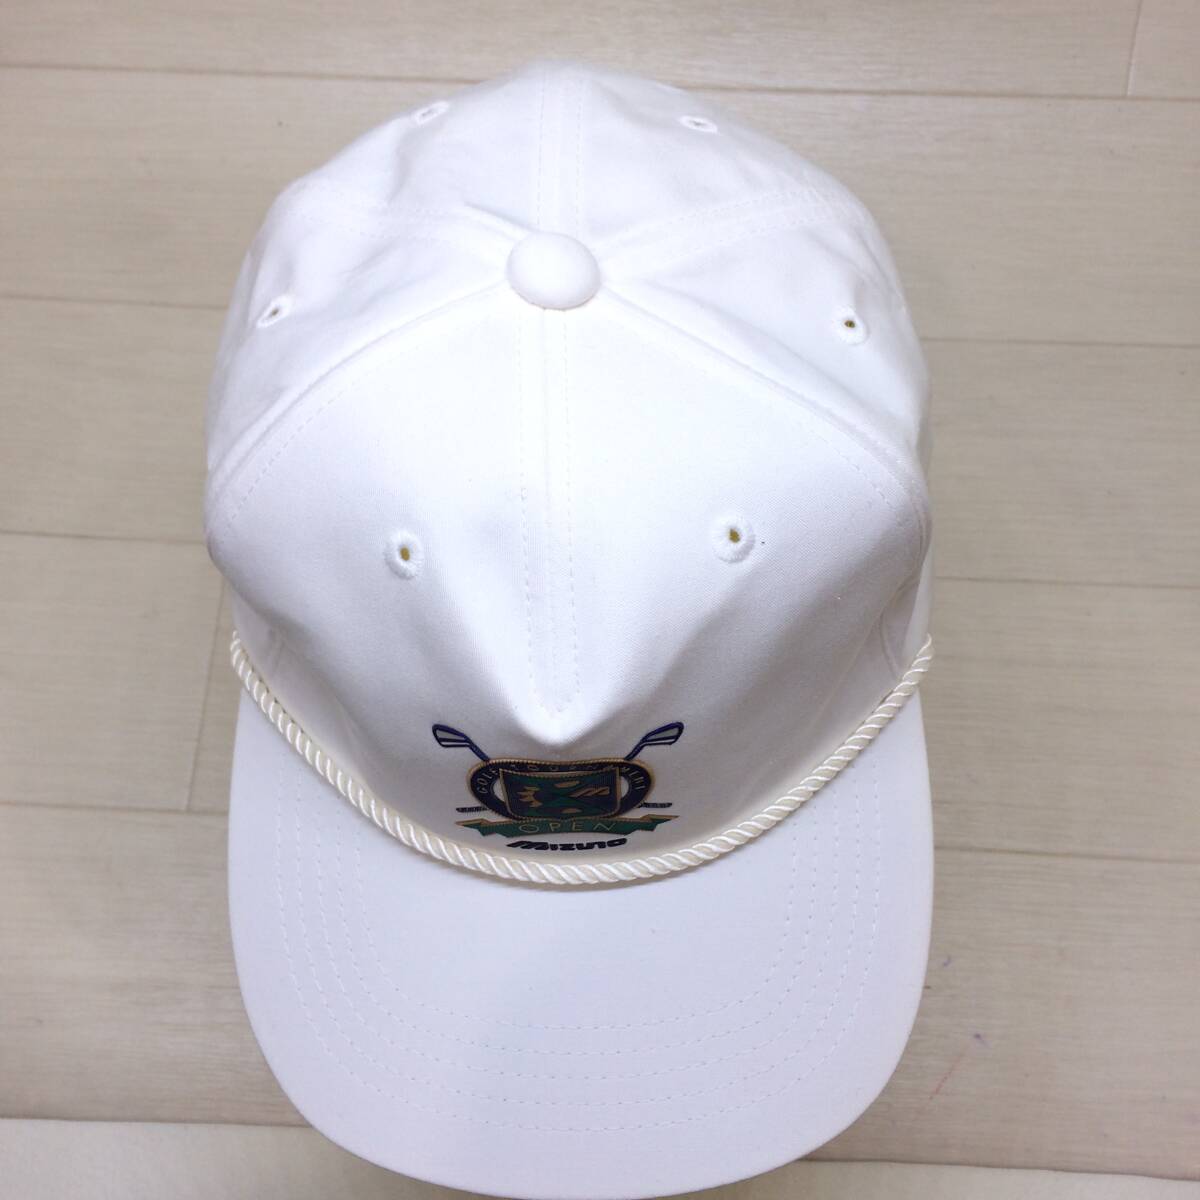 *MIZUNO Mizuno Golf cap hat L size made in Japan sport men's anti-bacterial deodorization waterproof tag attaching fashion accessories present condition goods *G80961